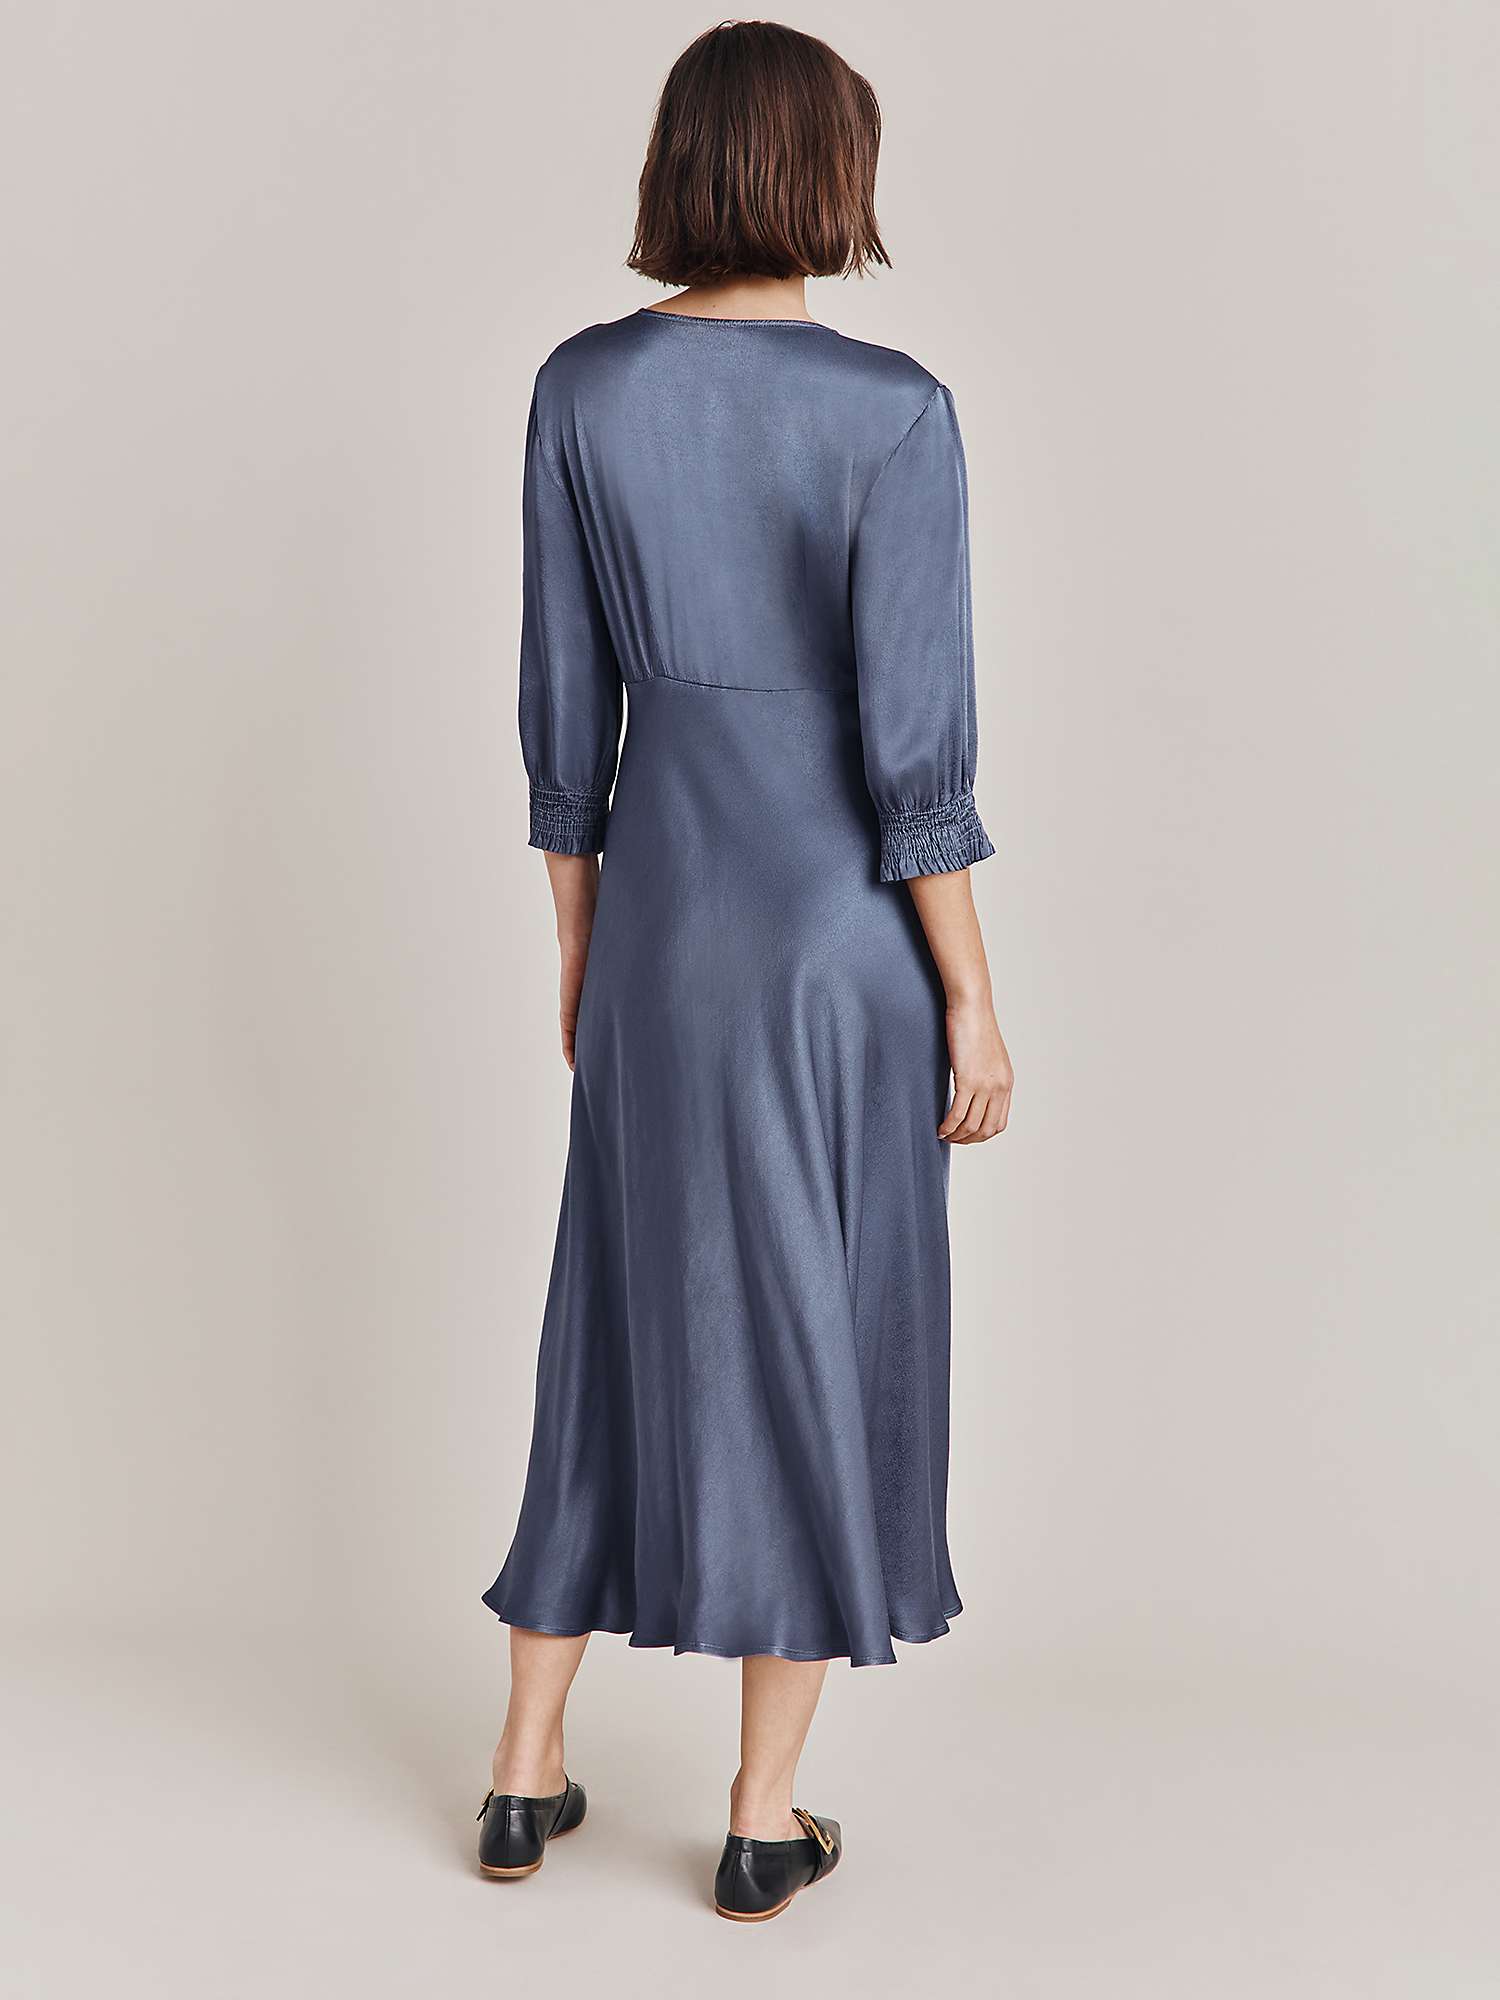 Ghost Elle Satin Midi Dress, Blue at John Lewis & Partners